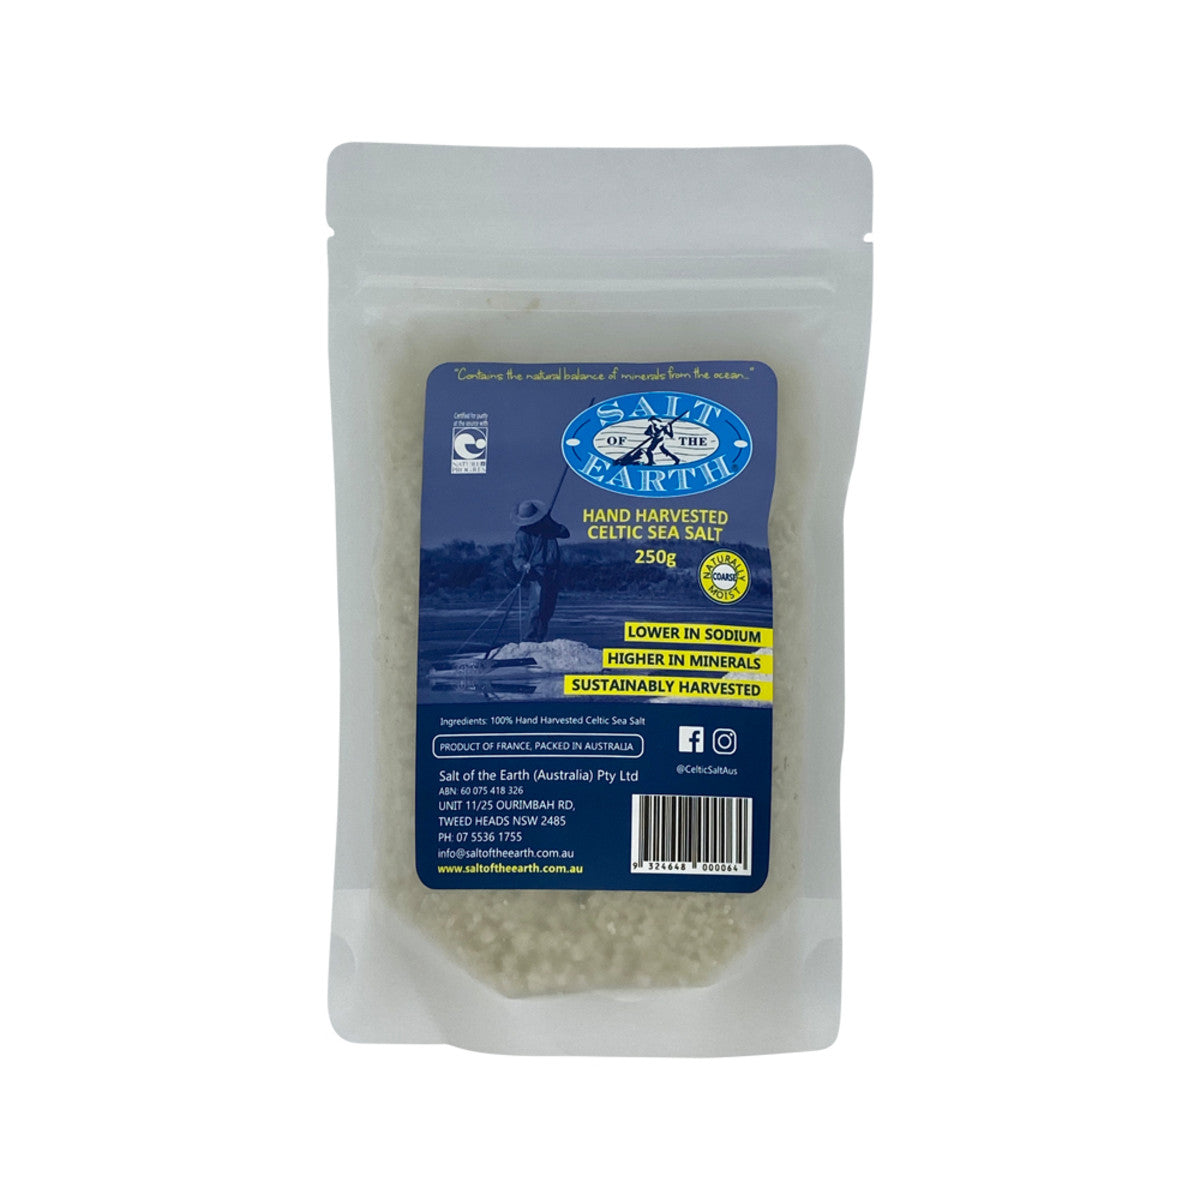 Honest To Goodness Celtic Sea Salt 600g, Fine & Hand Harvested